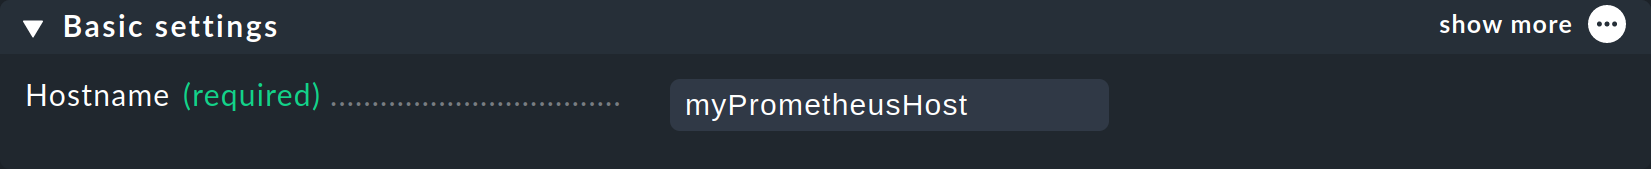 prometheus hostname